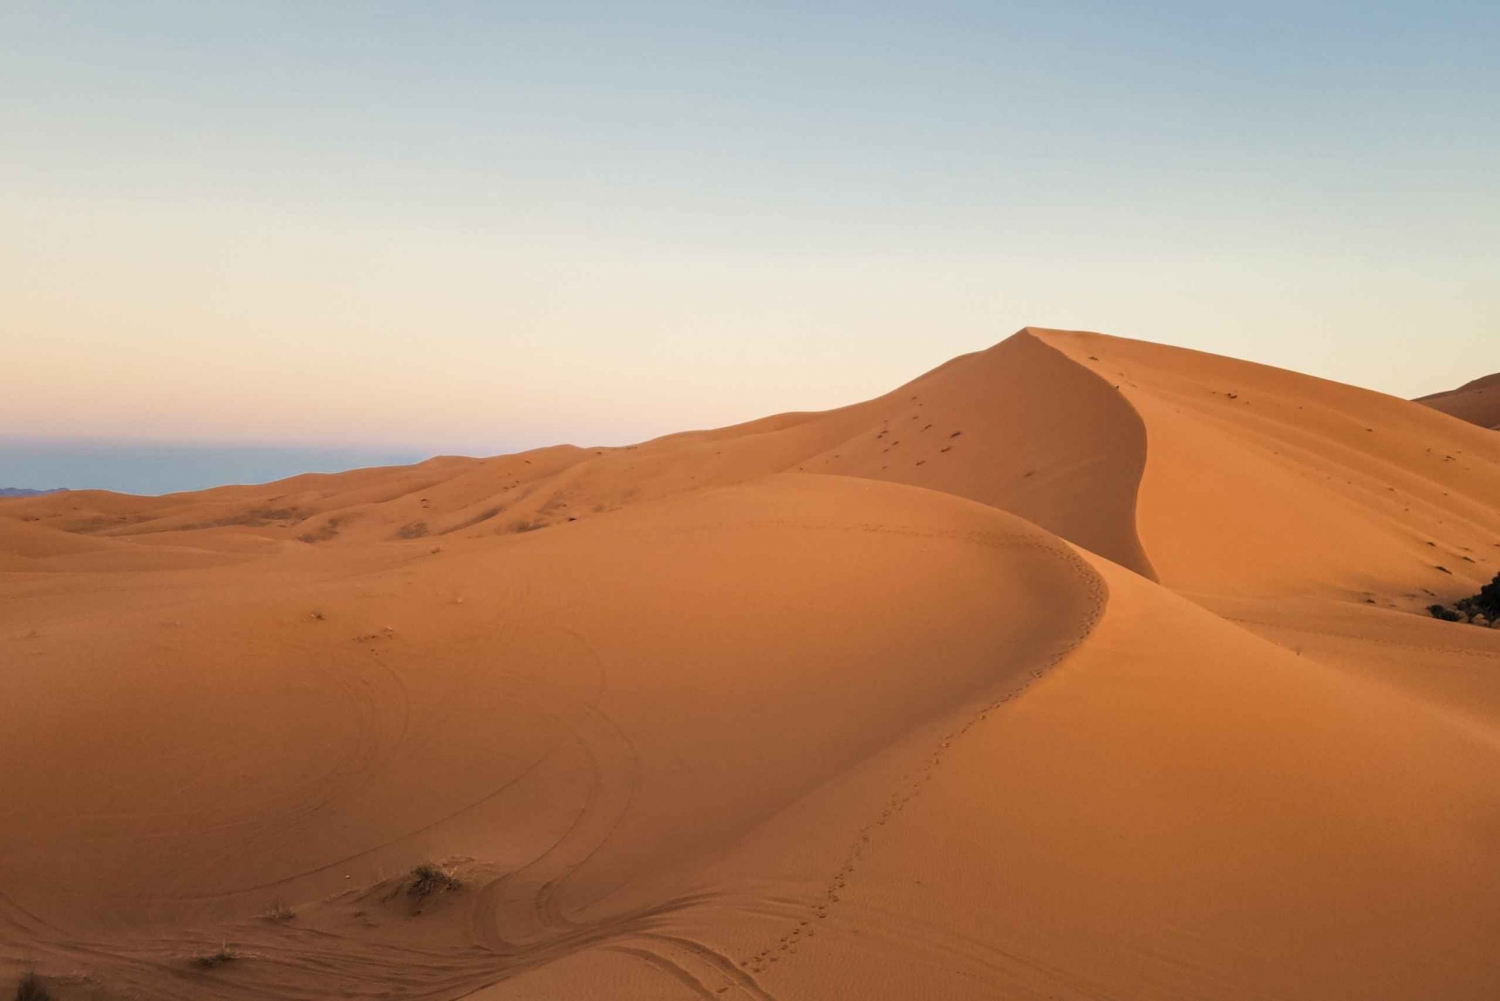 Acampamento no deserto de Merzouga de 3 dias e 2 noites saindo de Marrakech com camelo